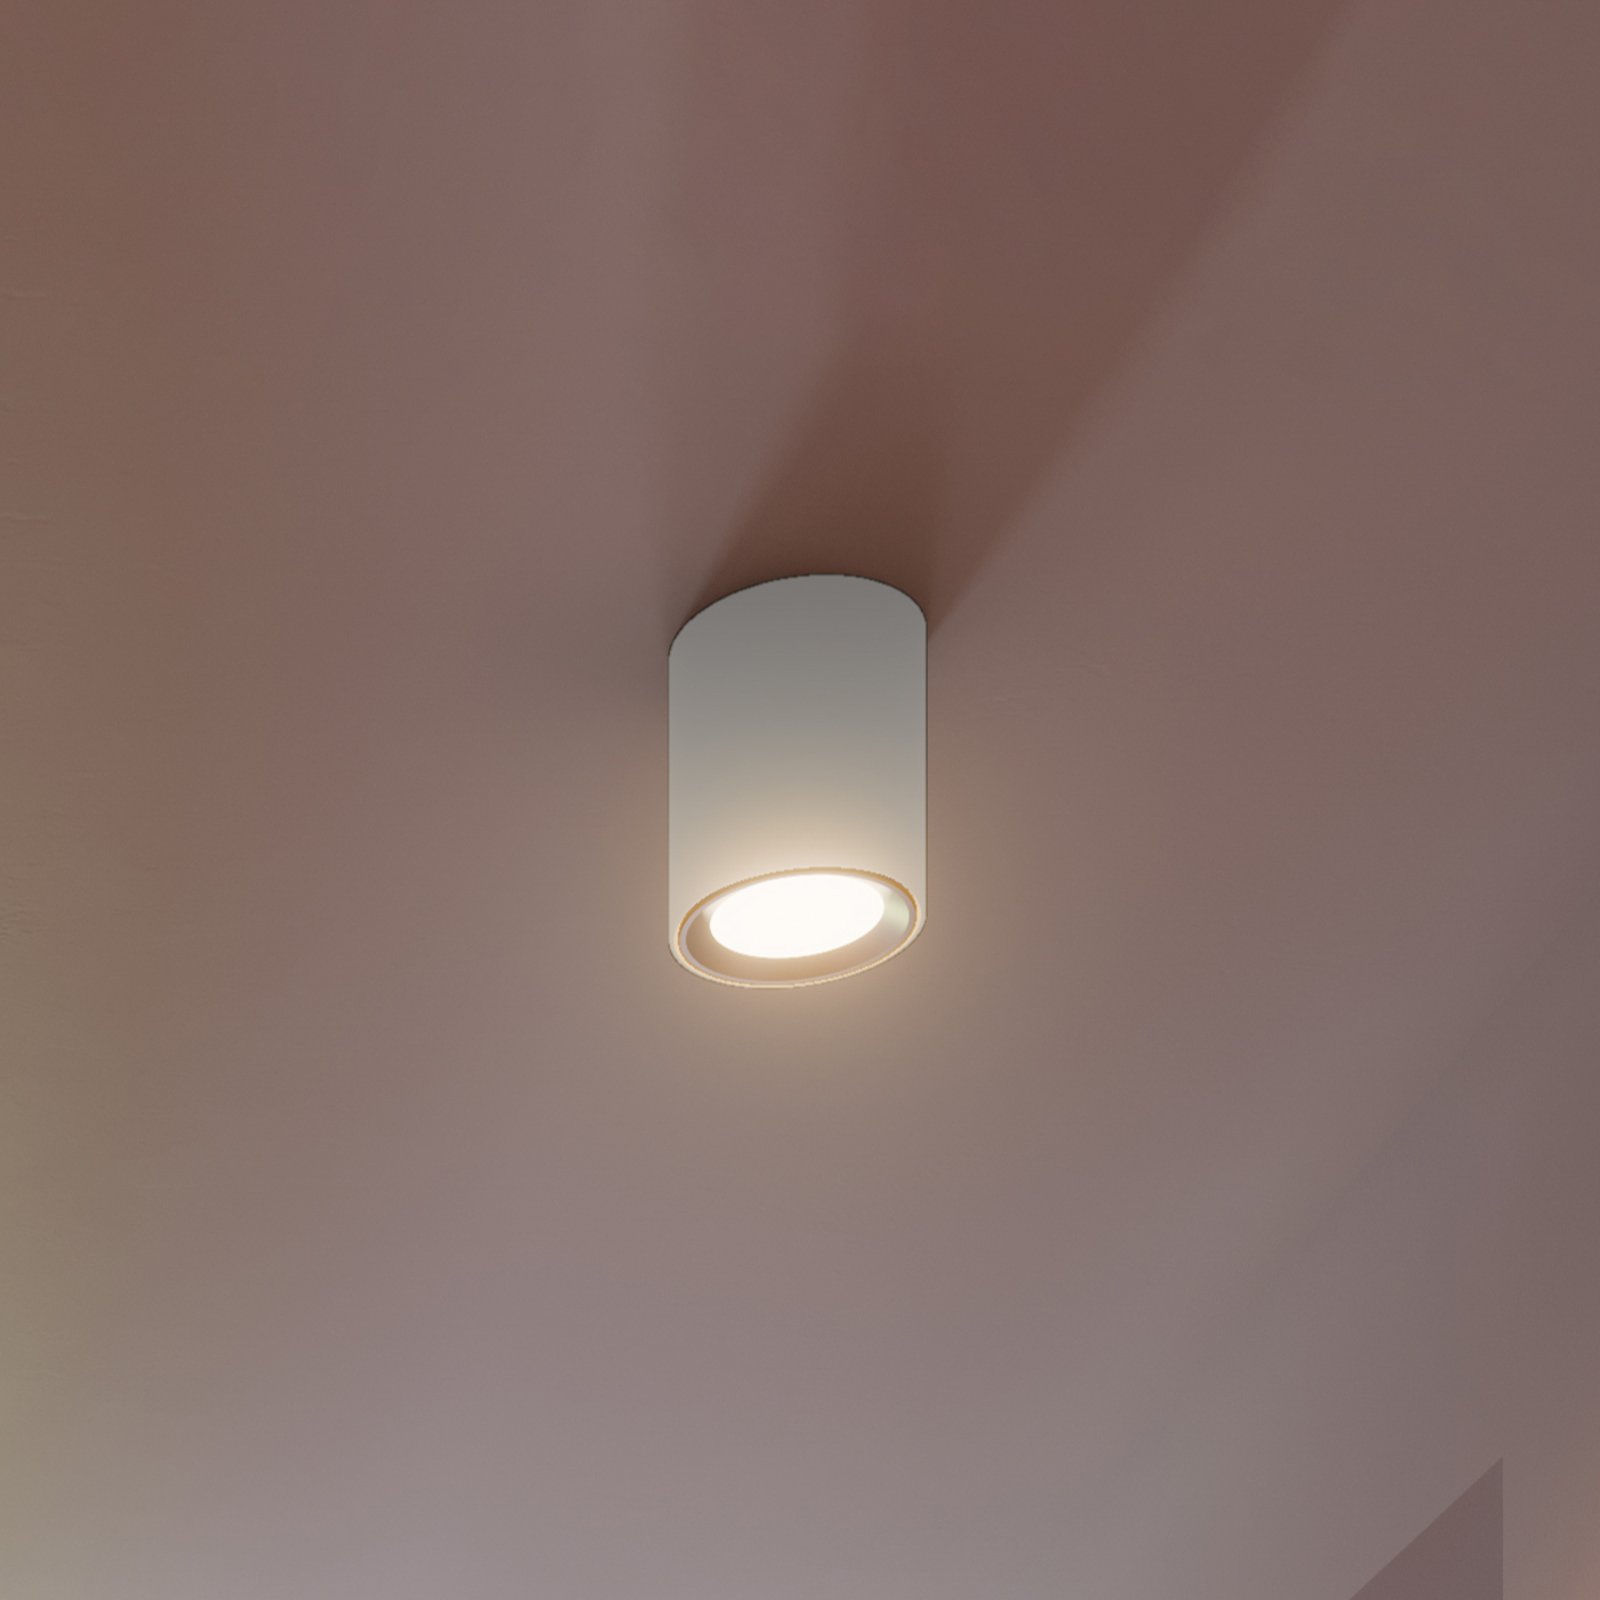 LED-takspot Landon Smart, hvit, høyde 14 cm